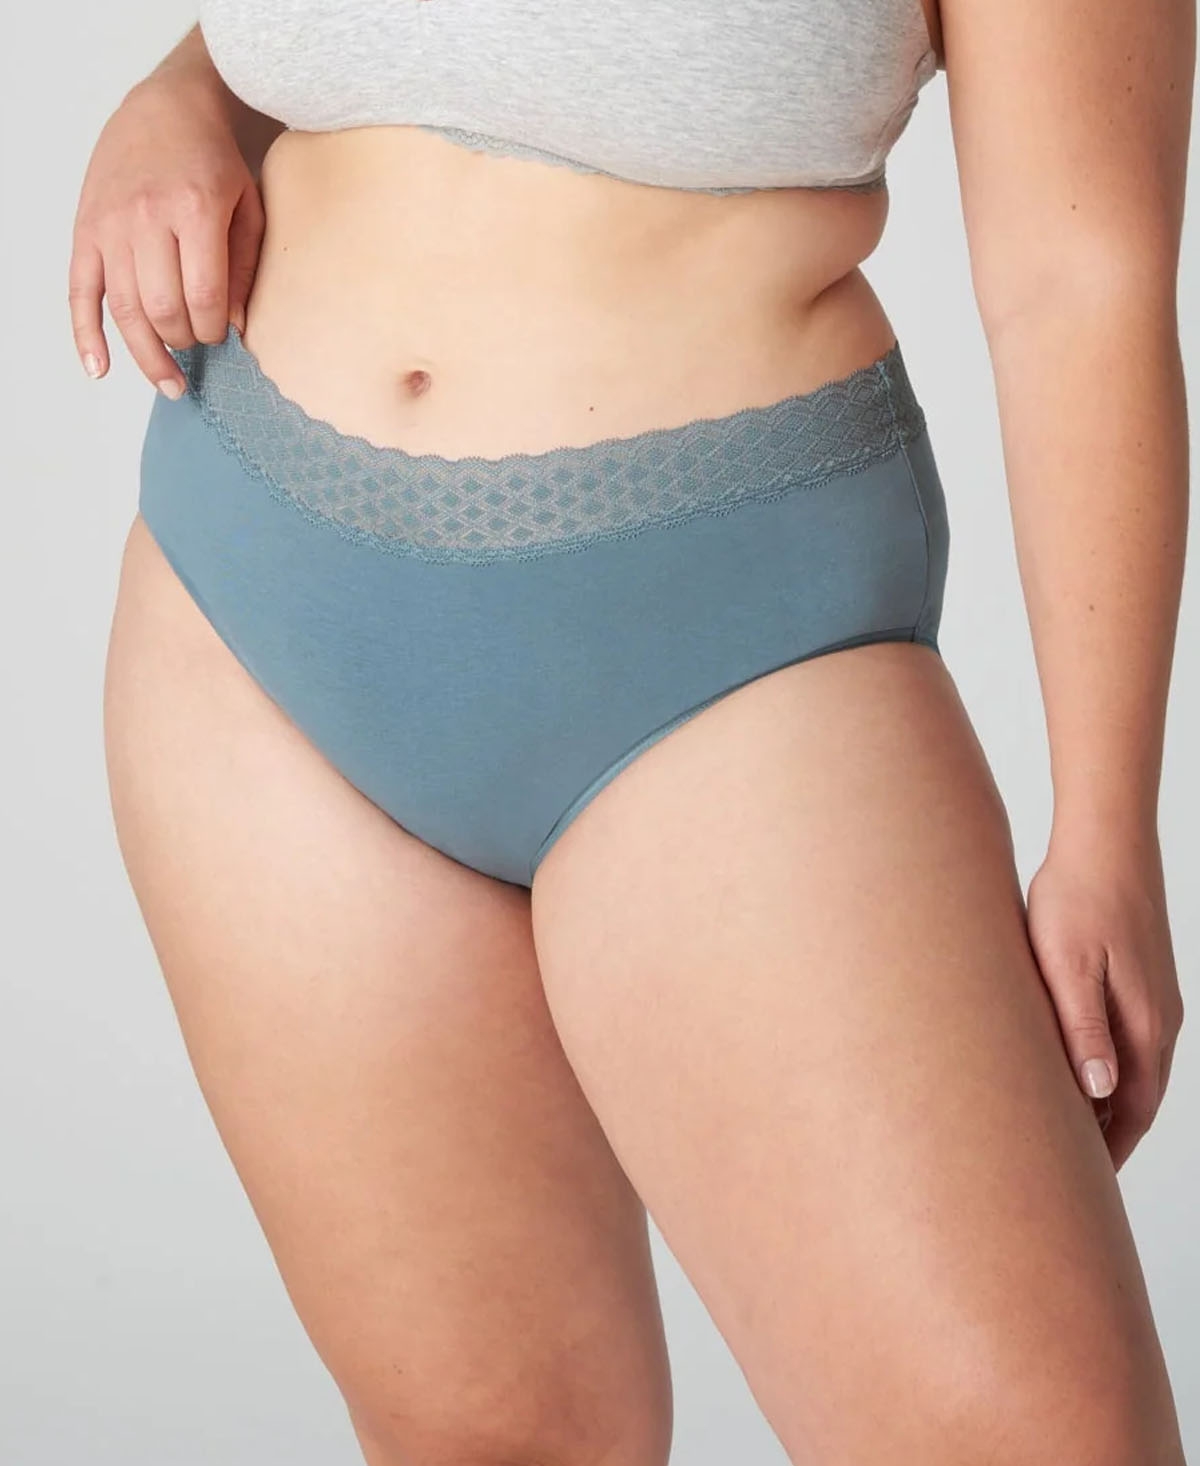 Viita Protection Period Proof Overnight Underwear - 8 Tampon